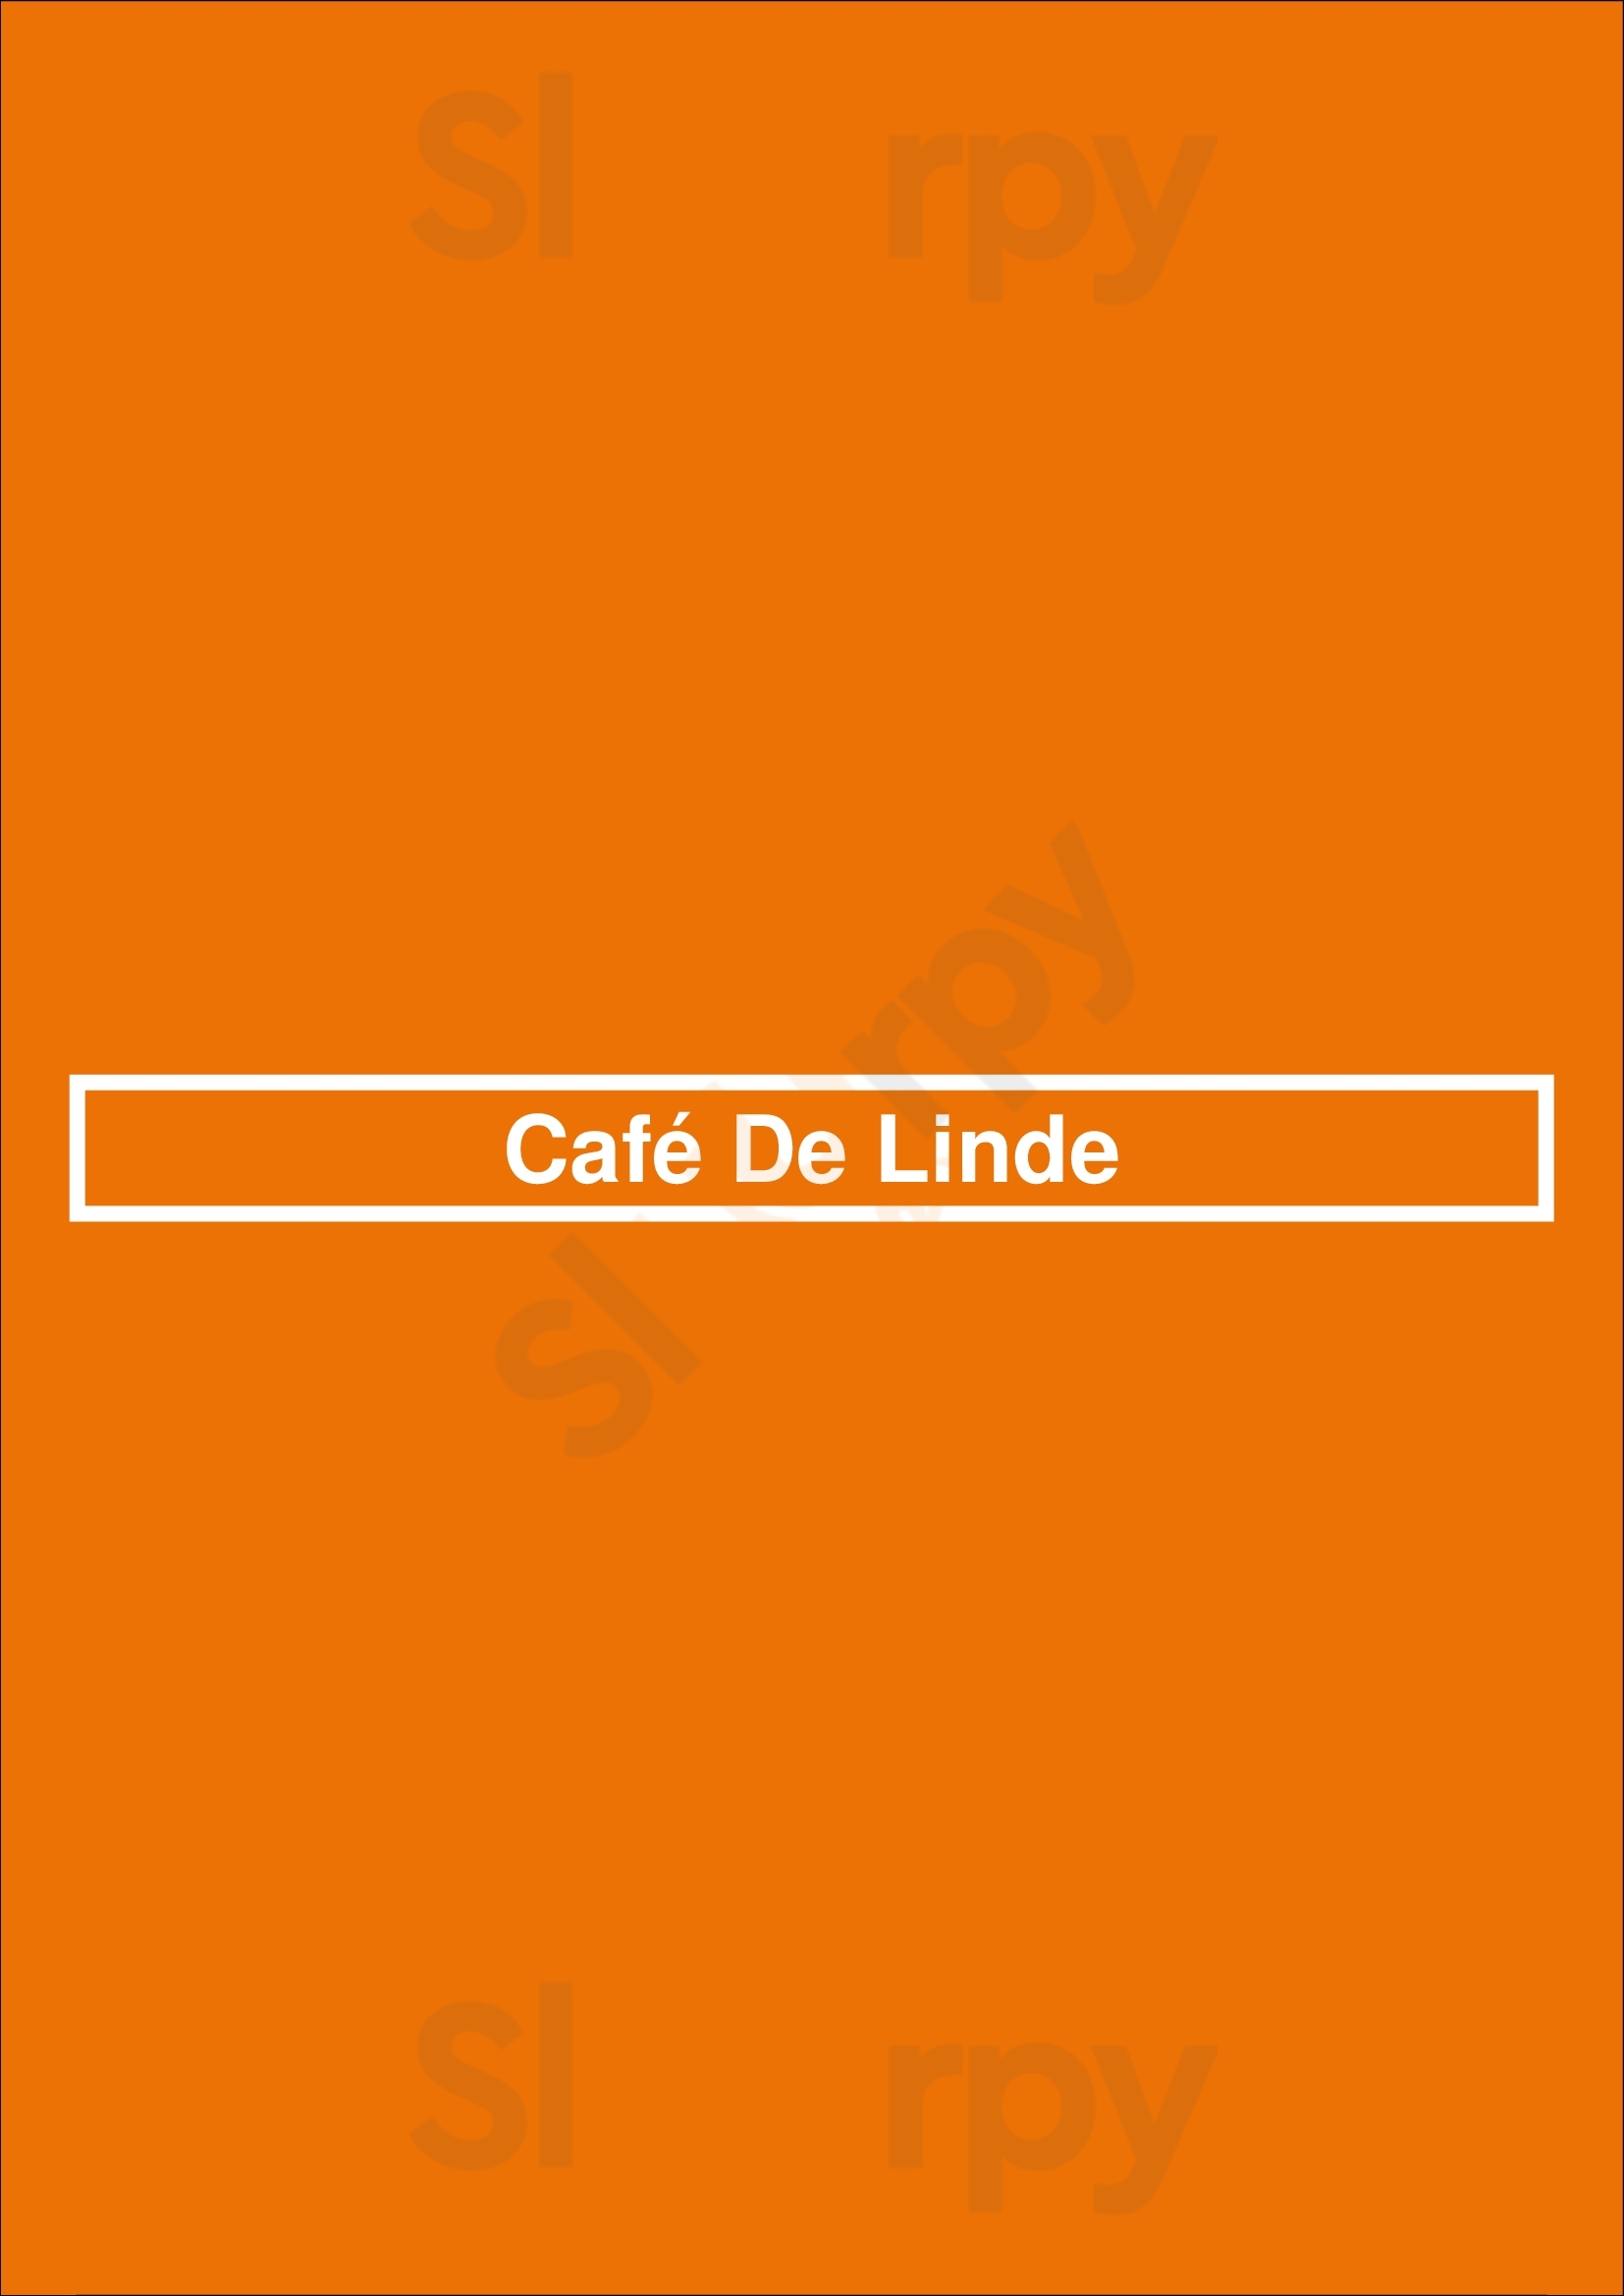 Café De Linde Haarlem Menu - 1